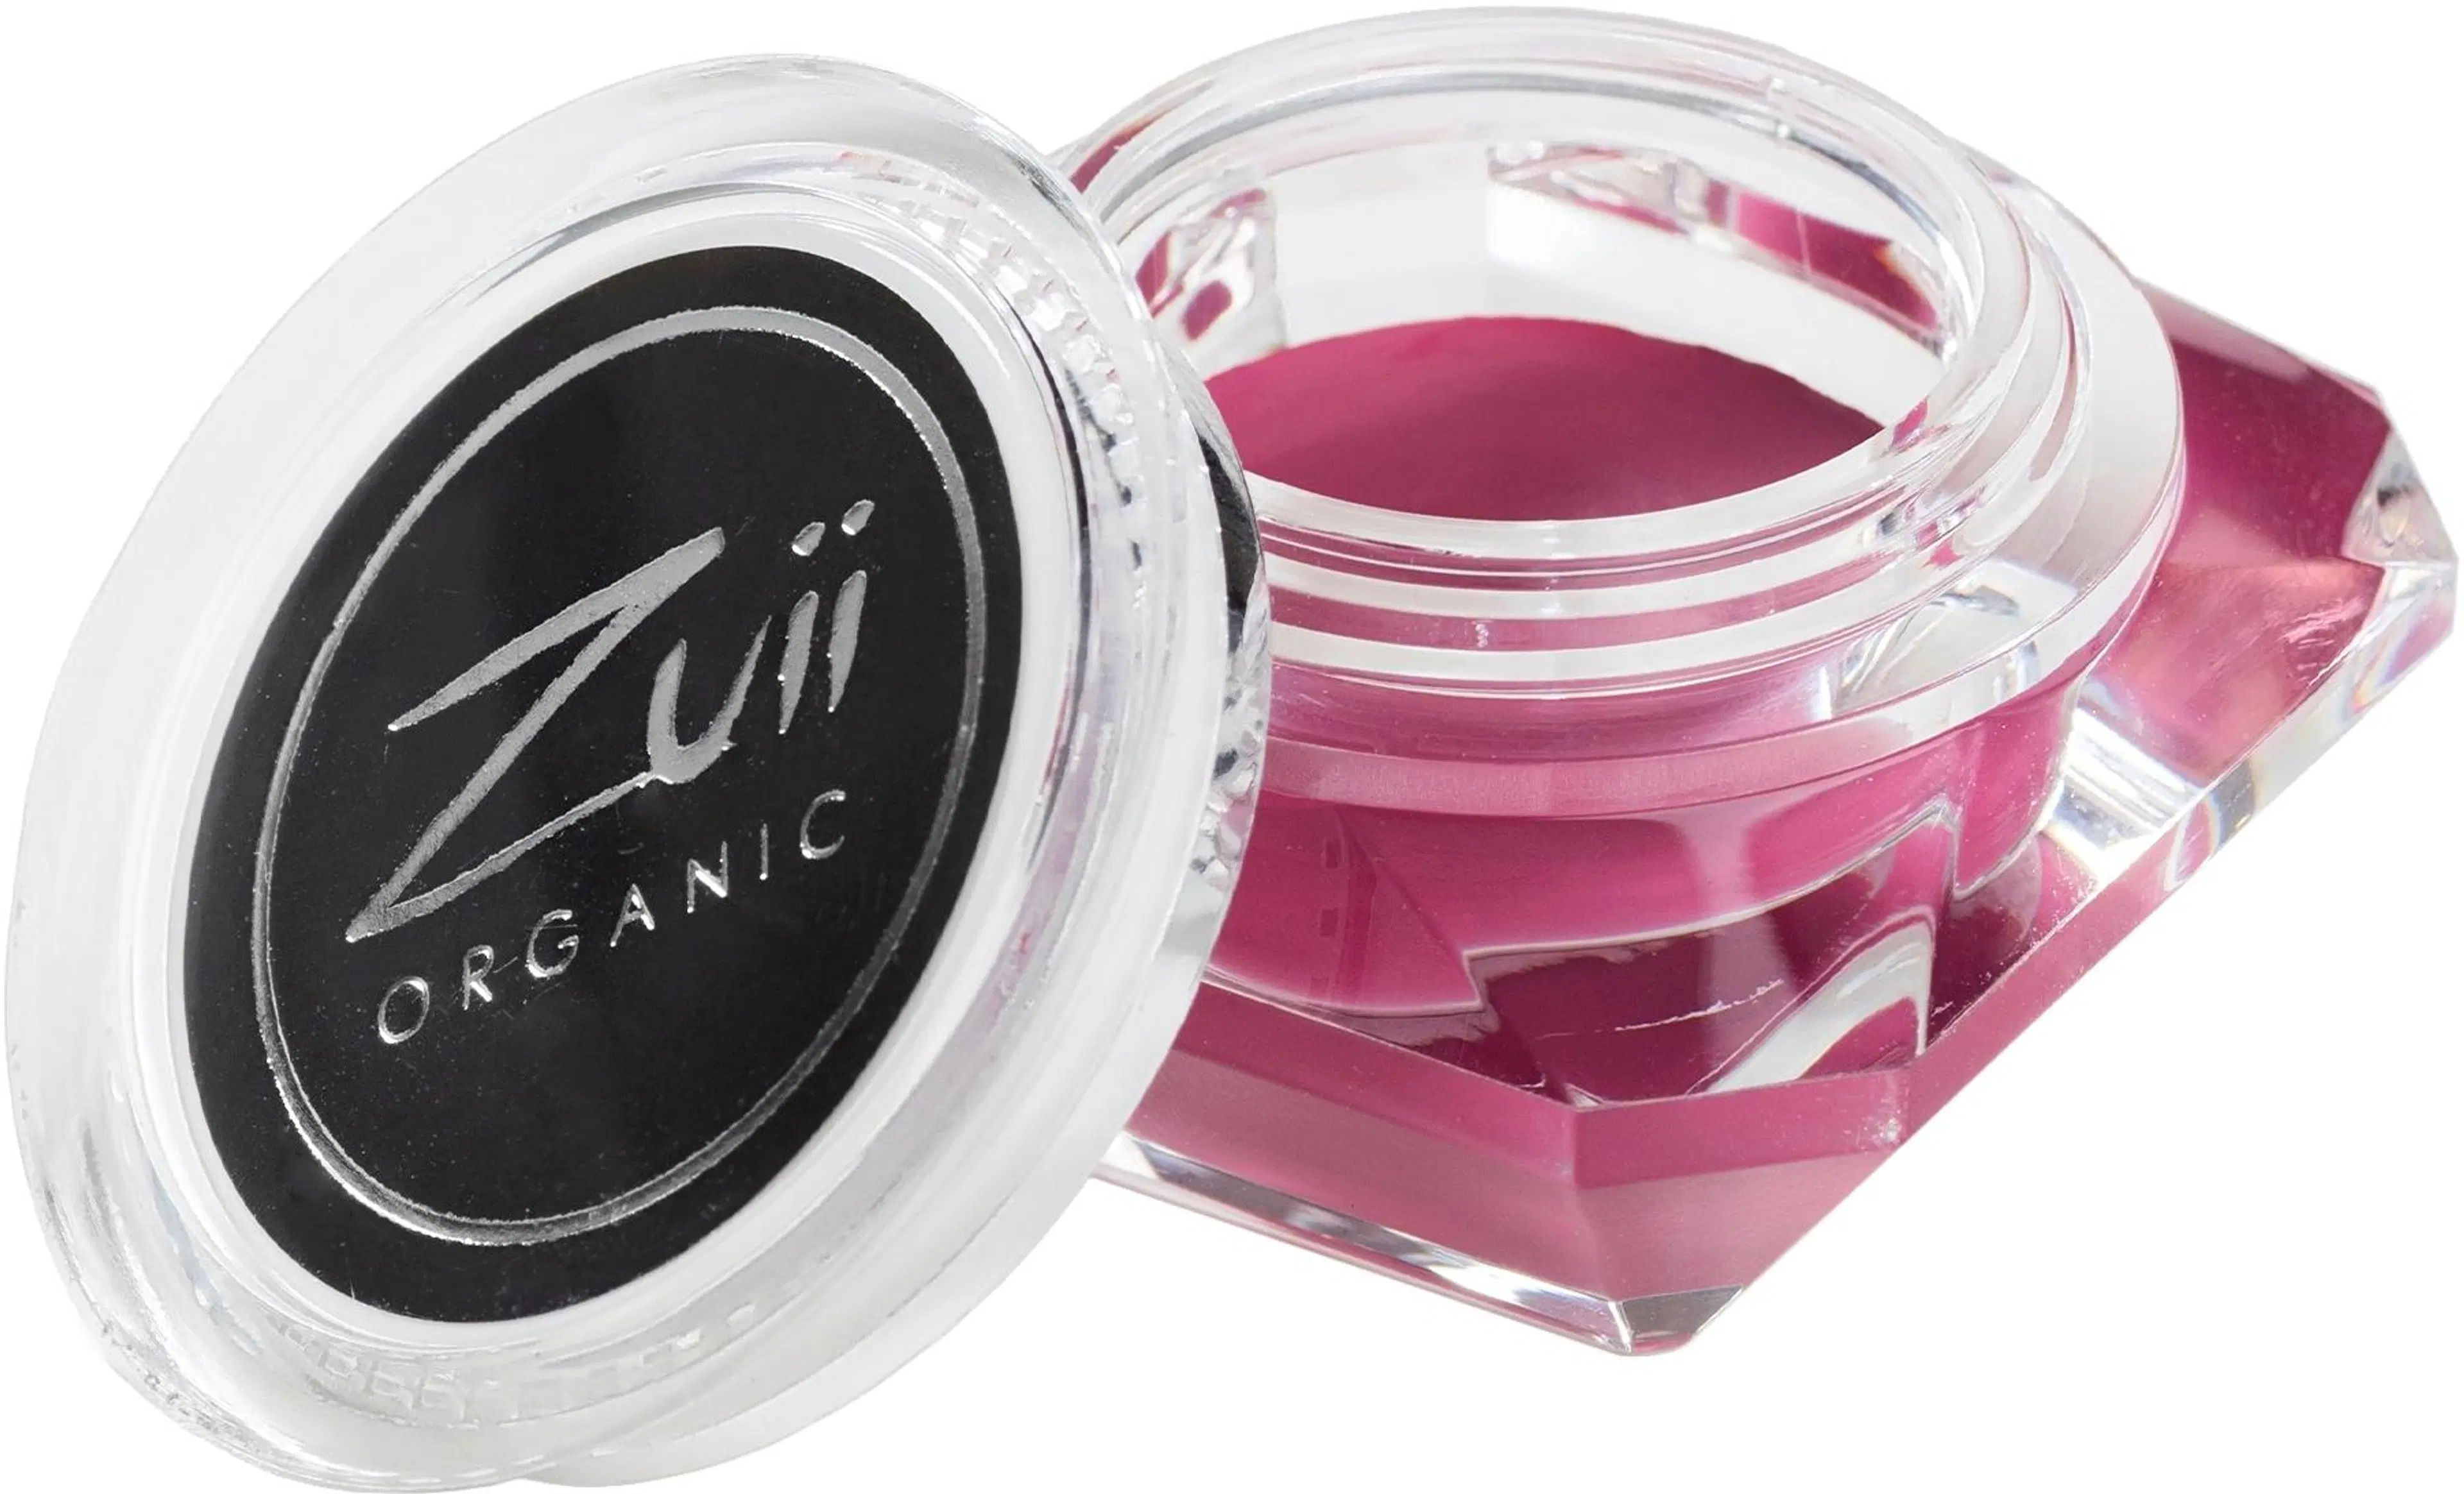 Zuii Organic Cheek & Lip Crème voidemainen poski- ja huulipuna 3,5g